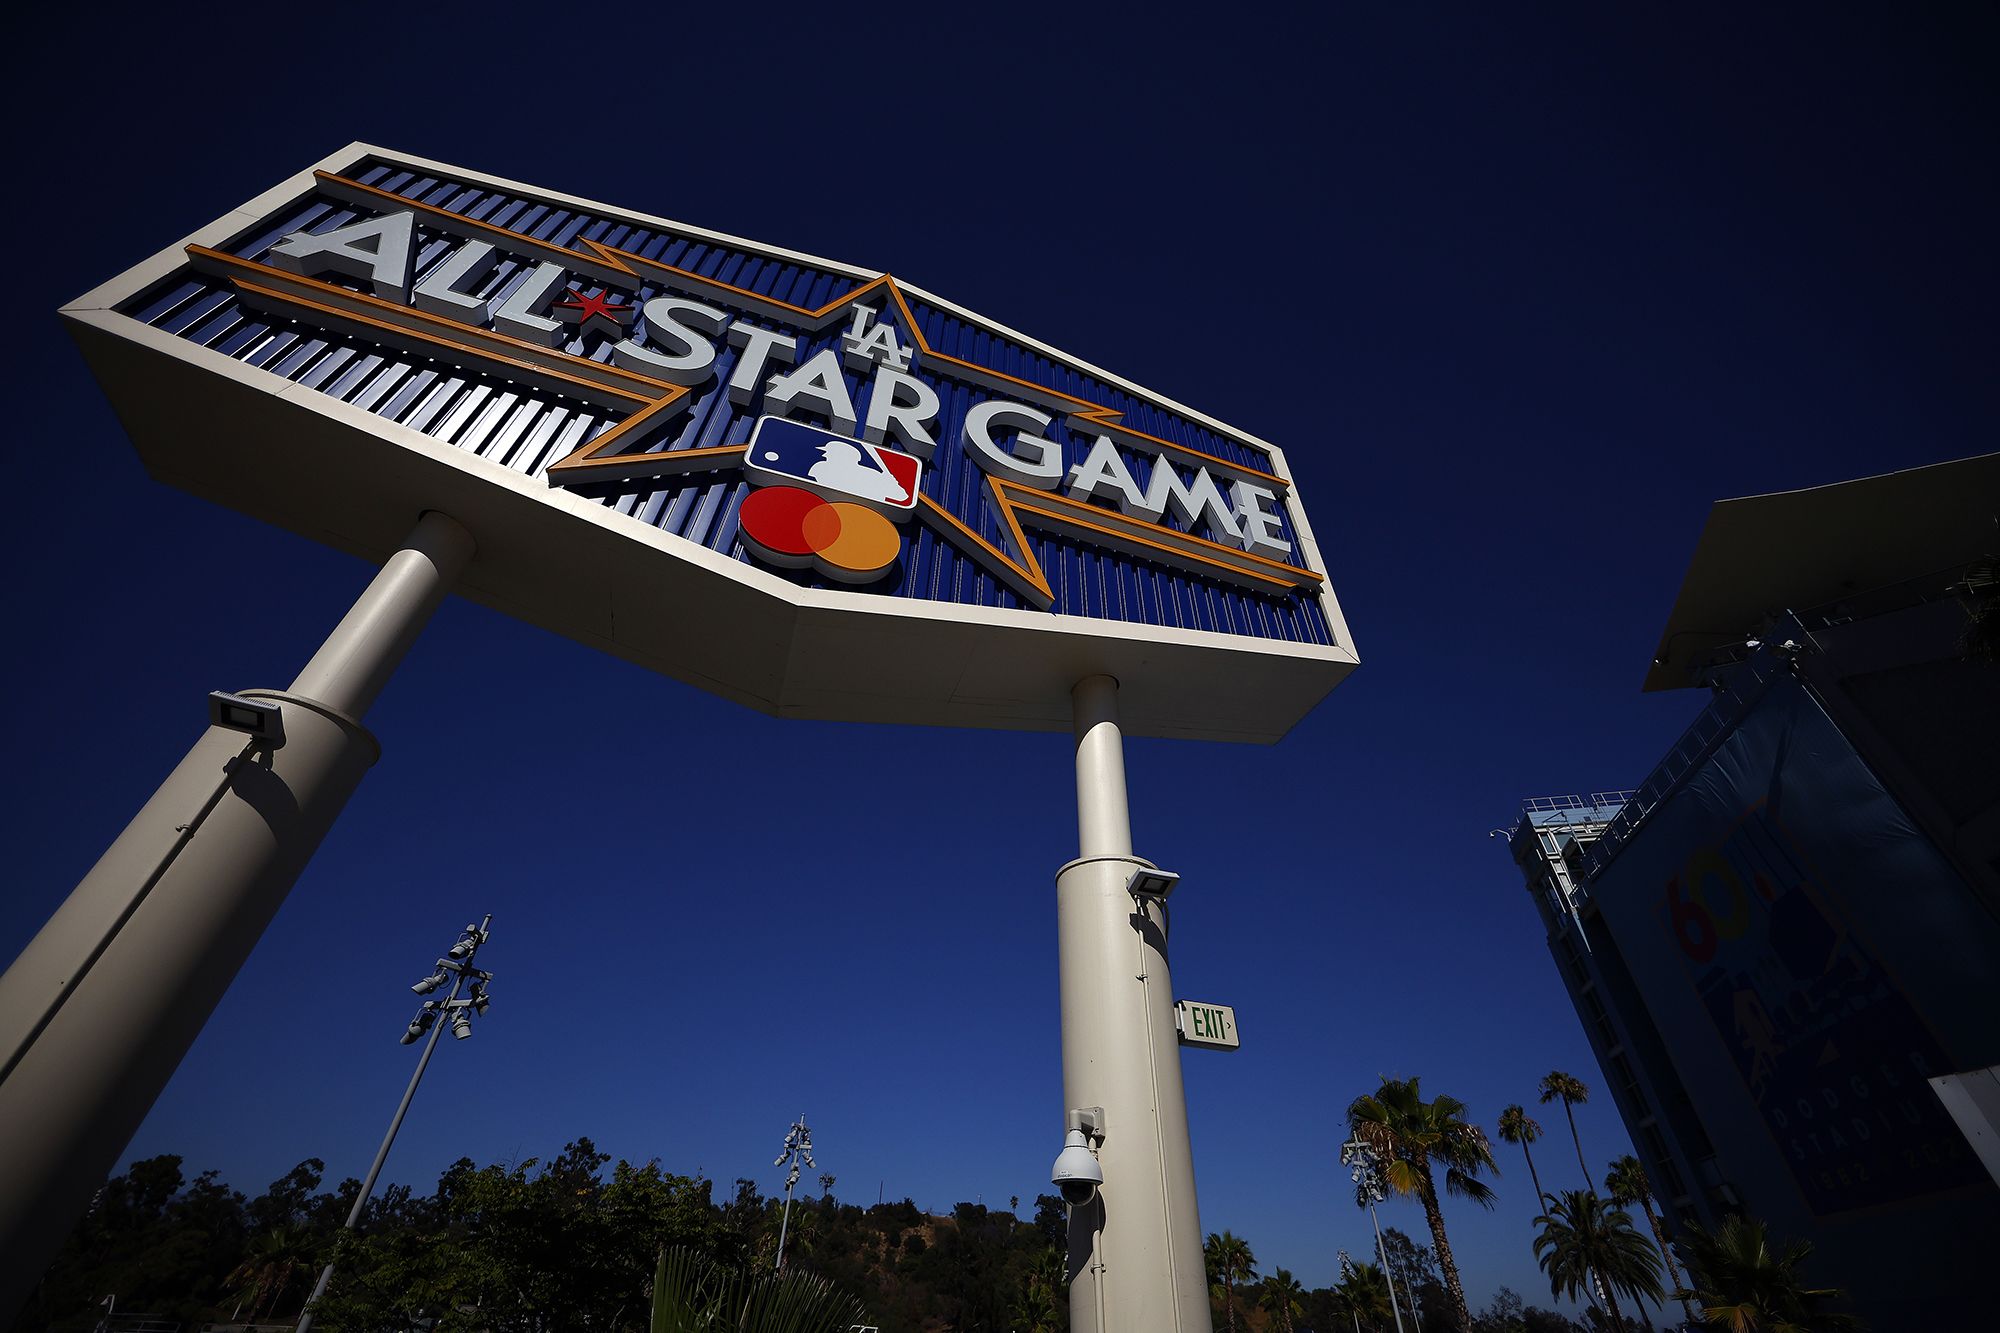 Employees at Dodger Stadium threaten to strike days before MLB All